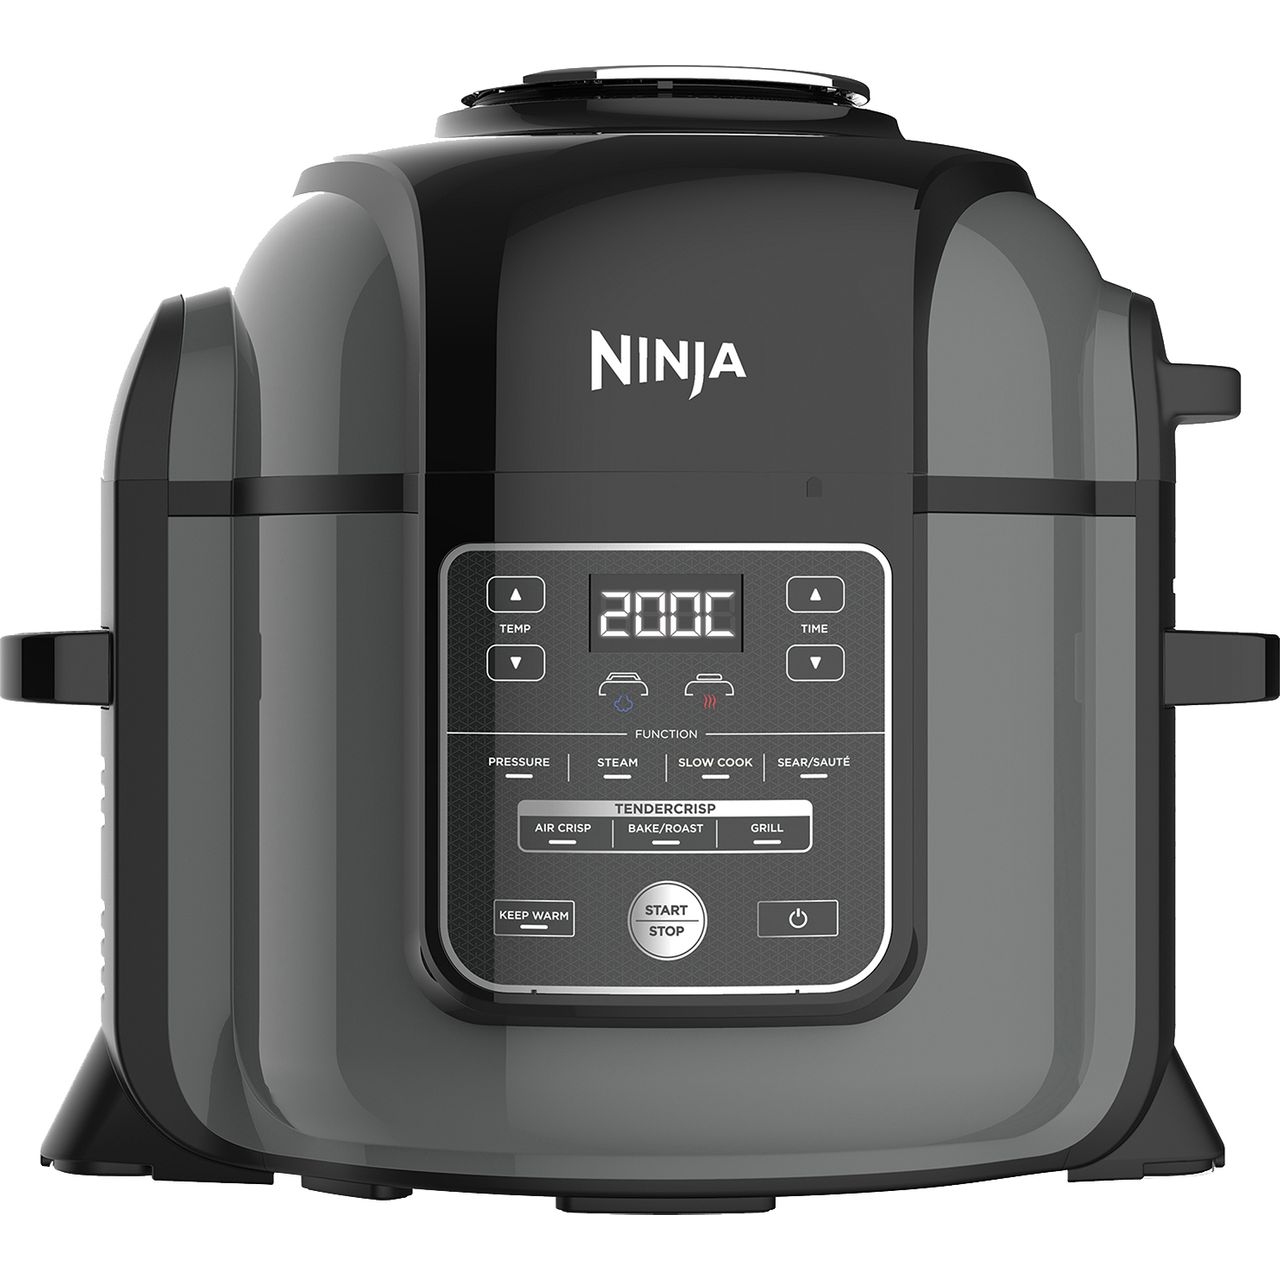 Ninja OP450UK 7.5 Litre Multi Cooker Review